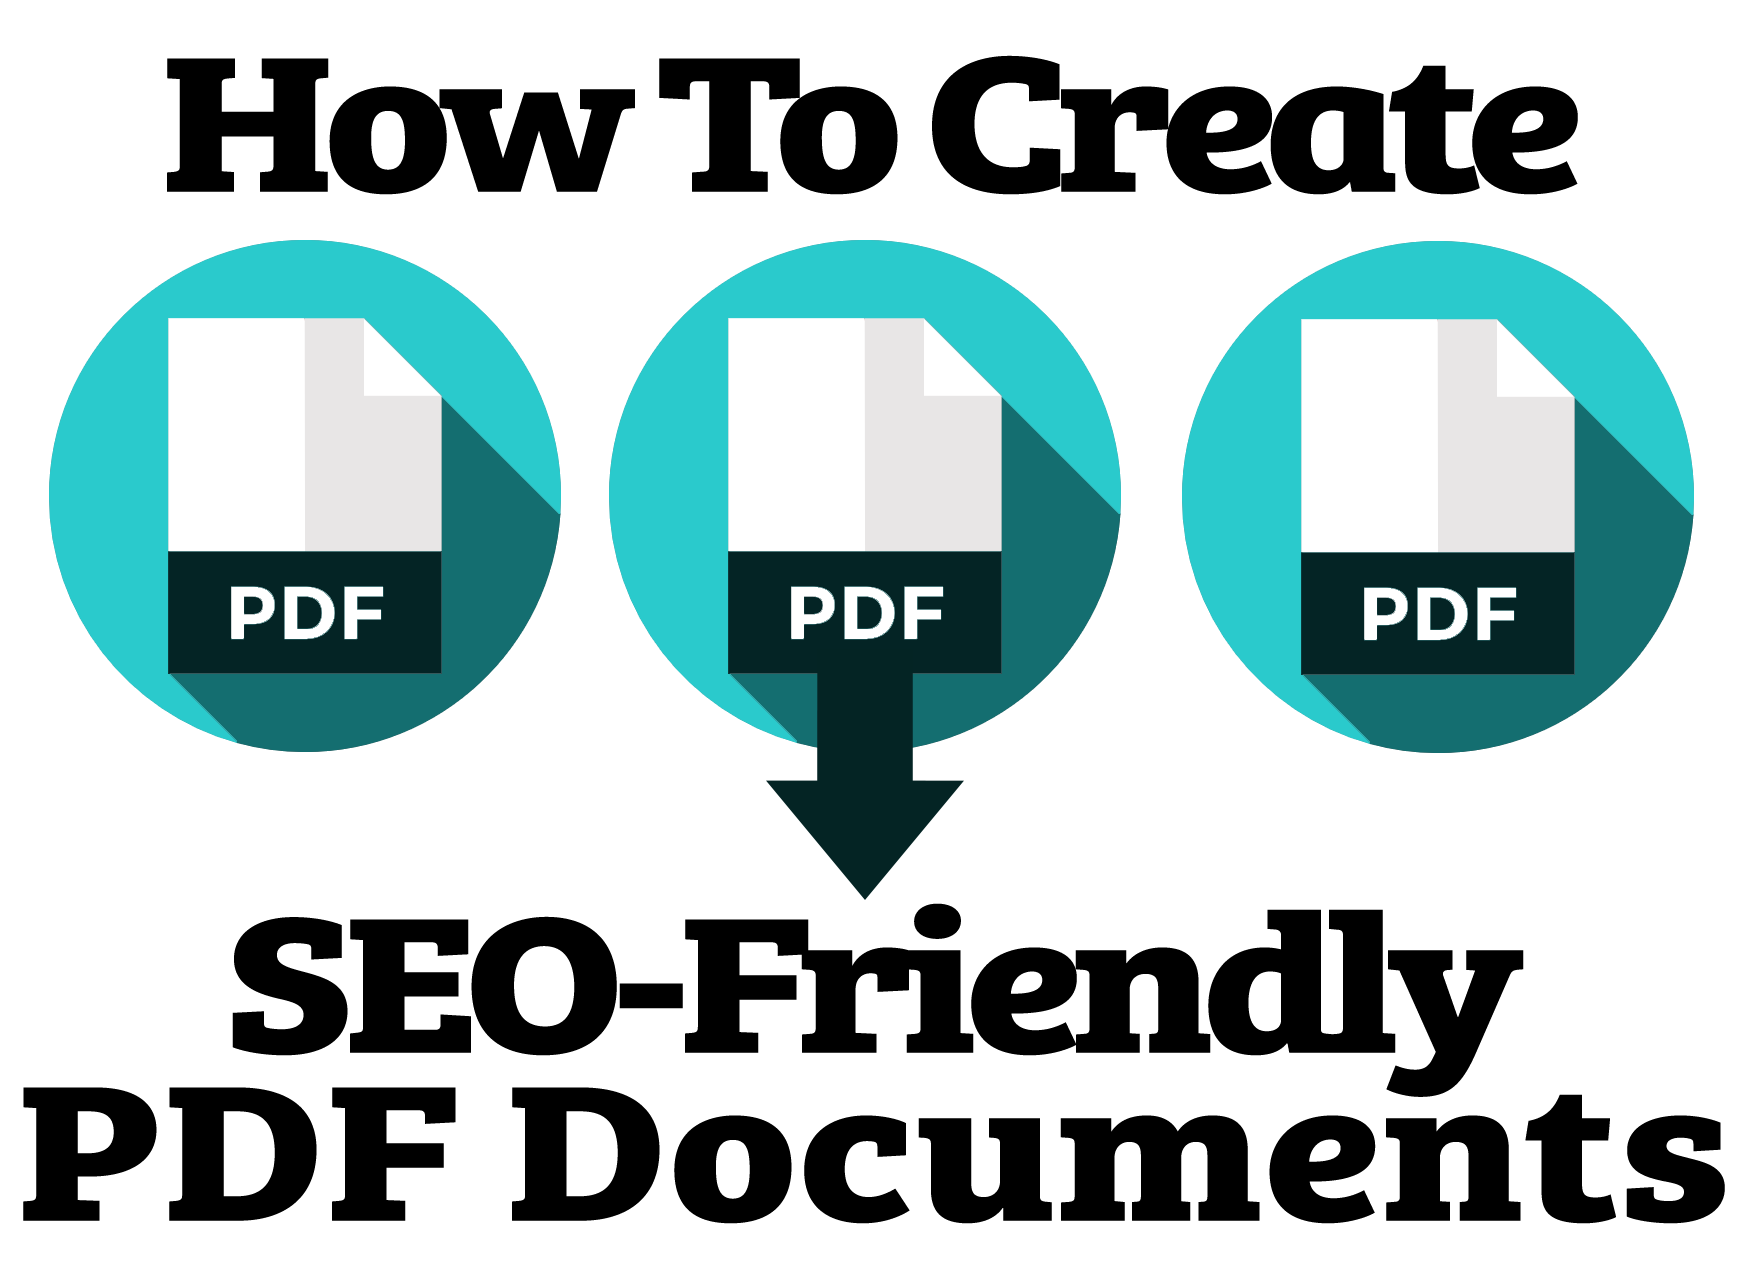 How to create SEO friendly PDF documents